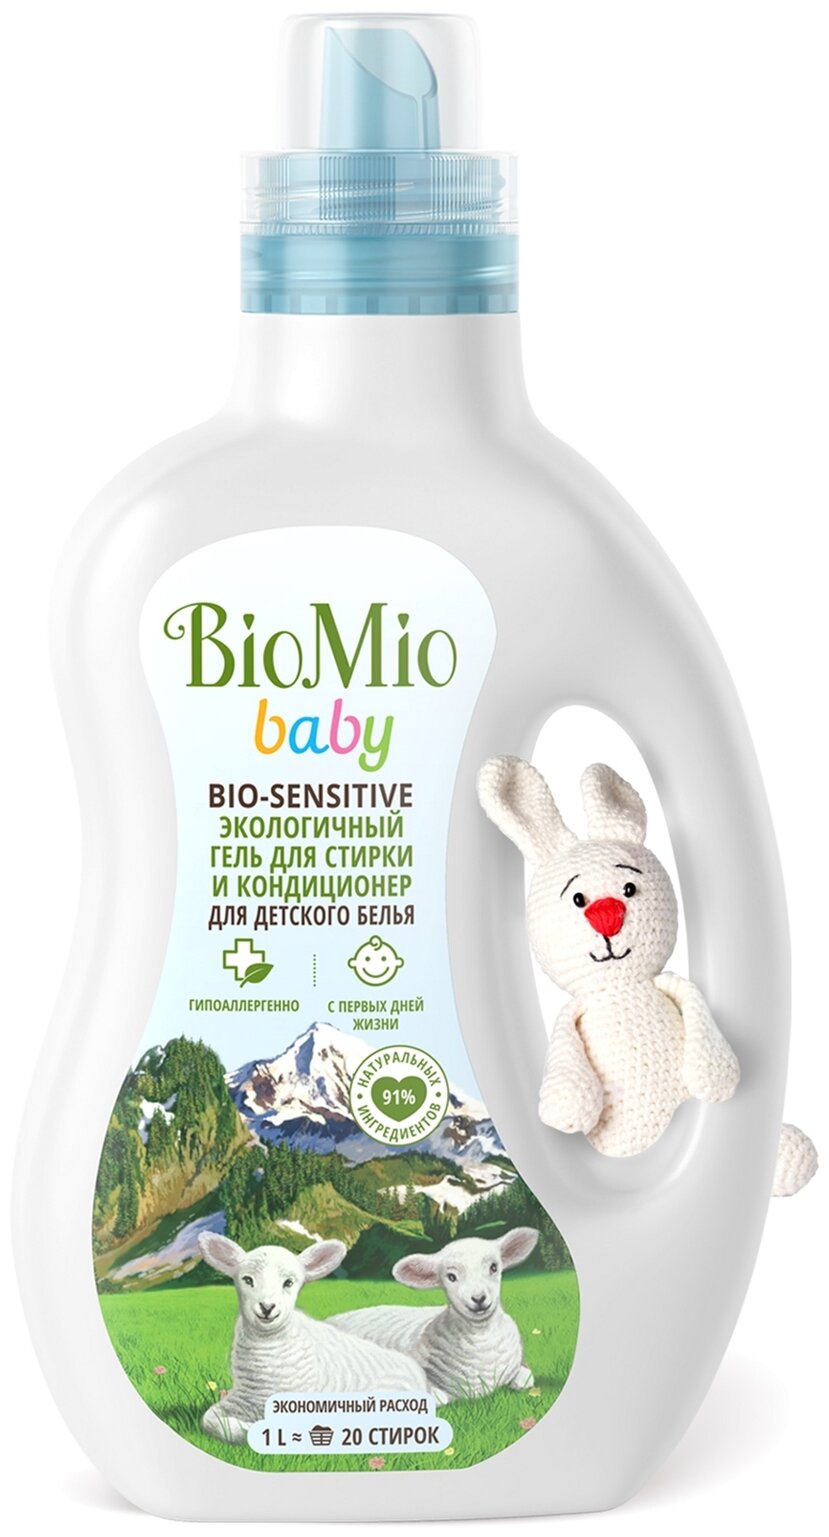 BioMio BioSensitive Baby - тип стирки: машинная, ручная